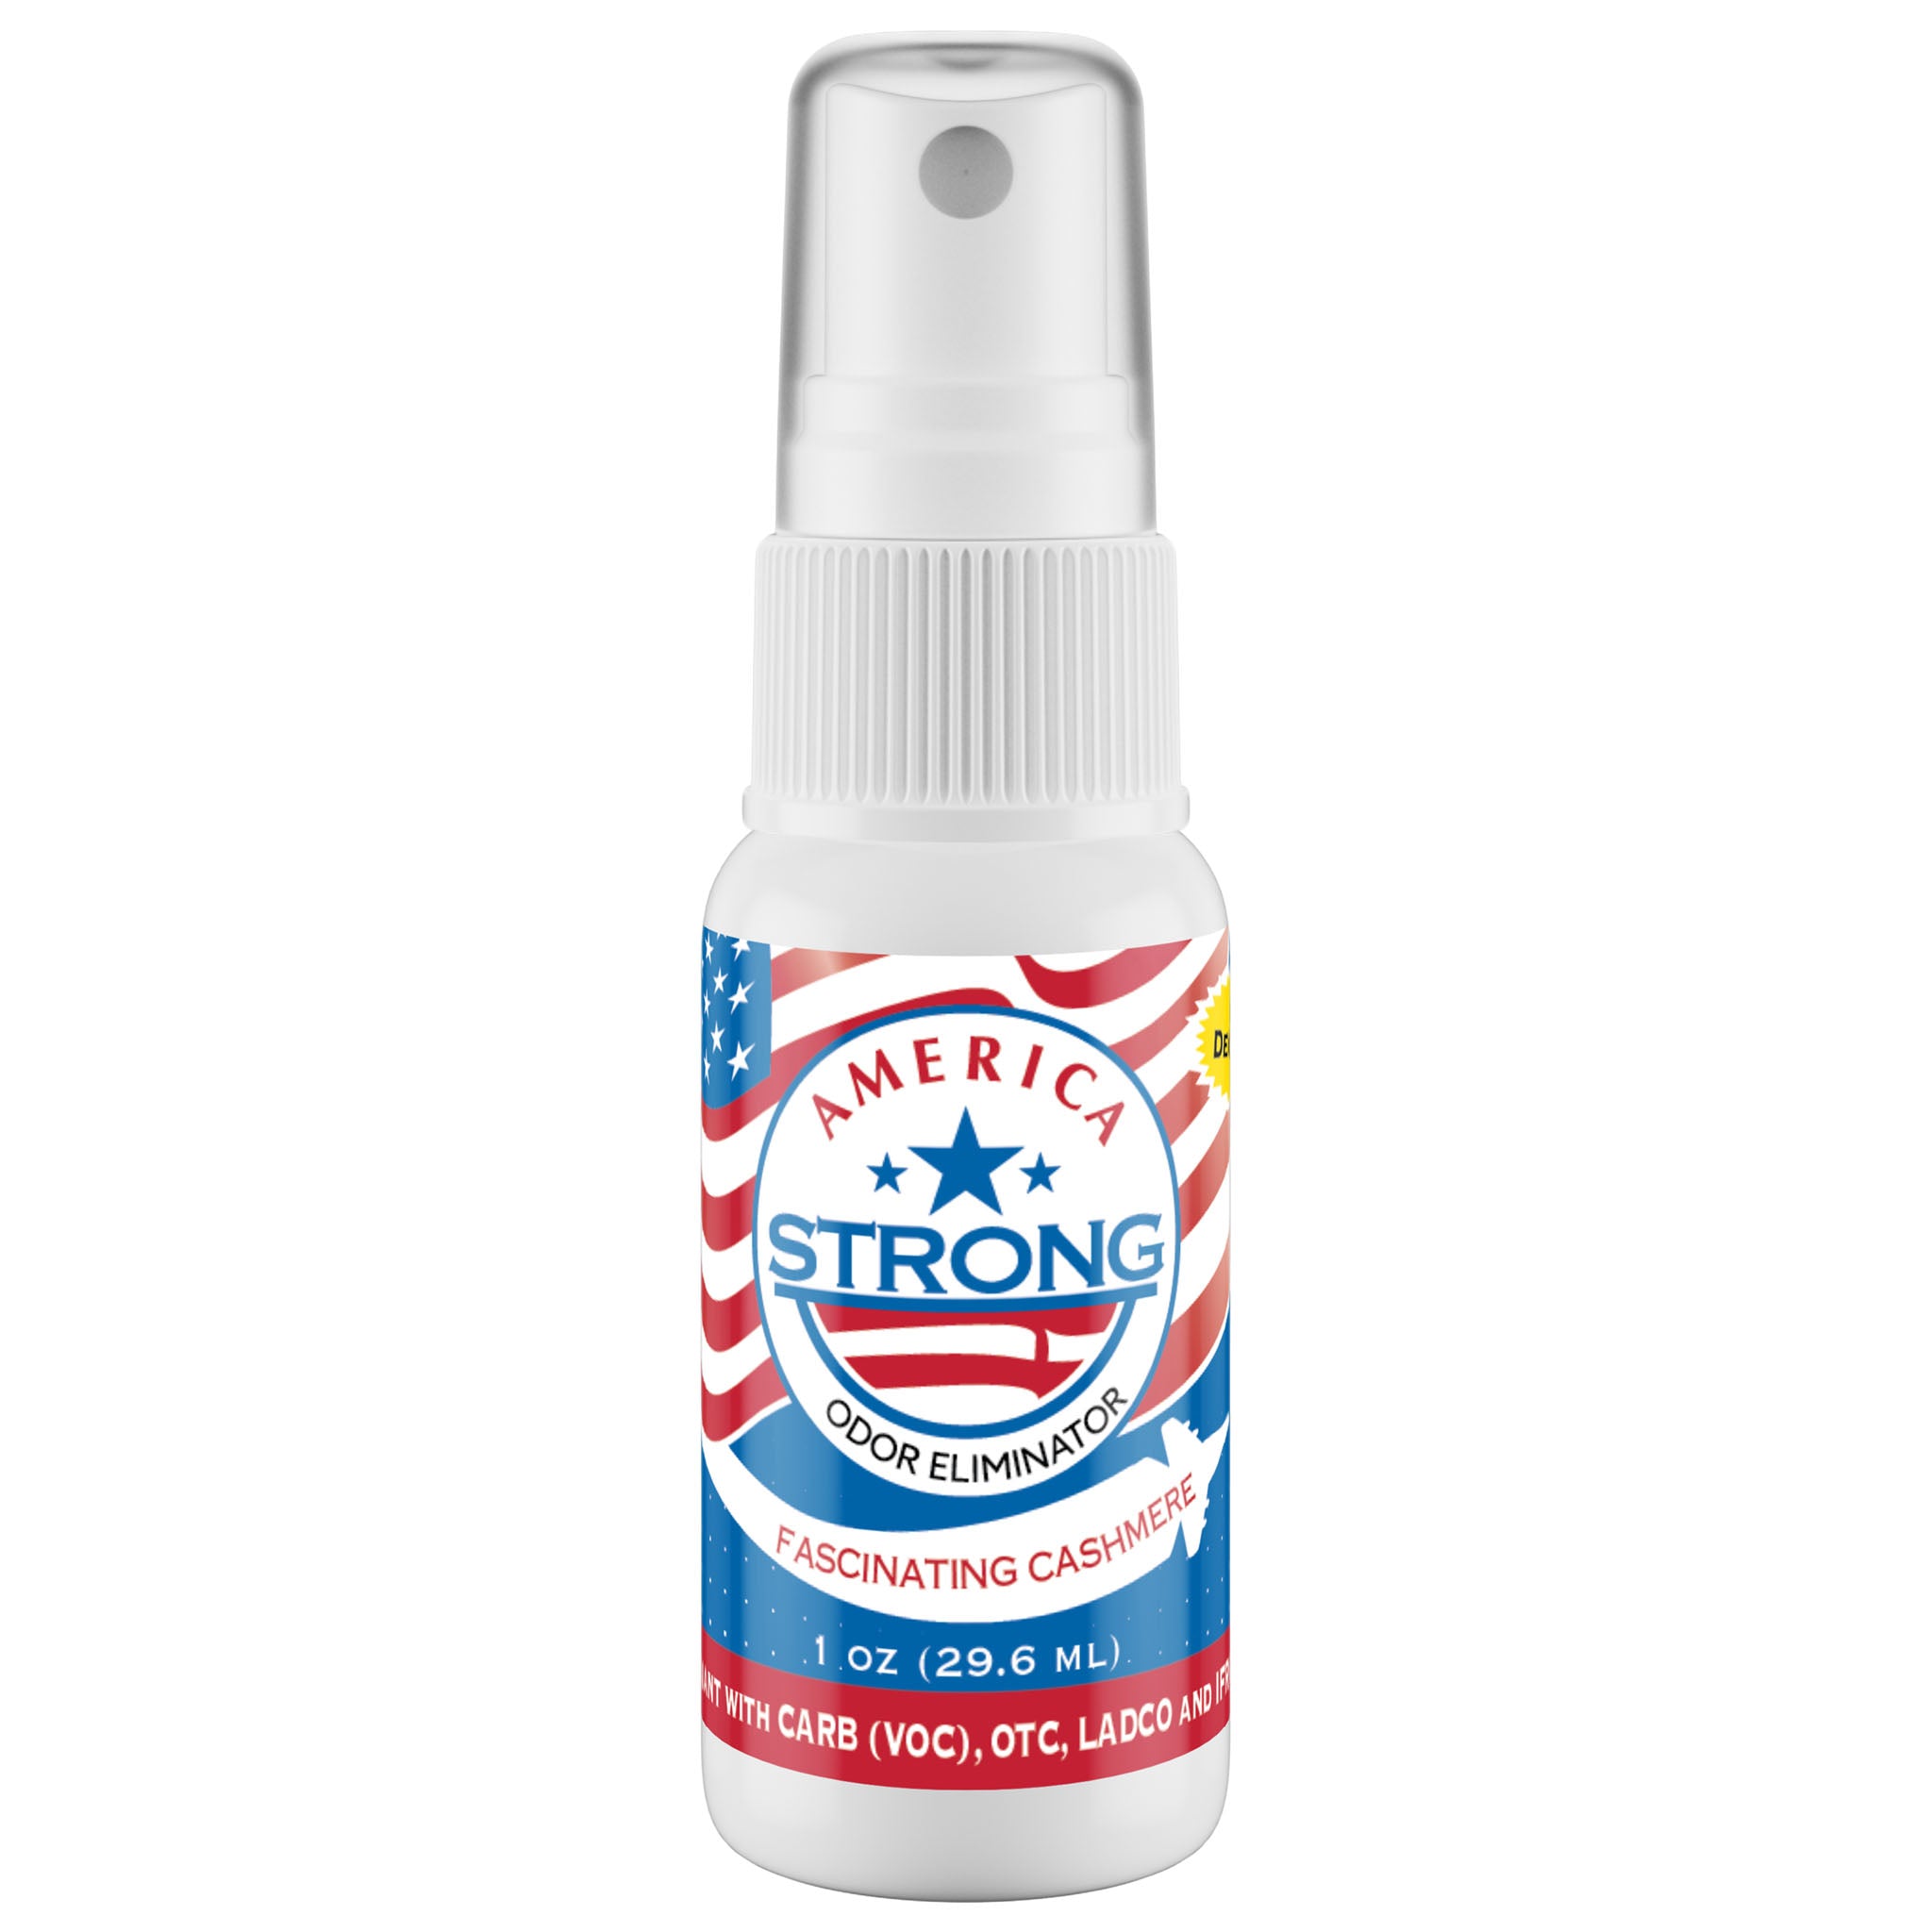 America Strong Odor Eliminator - Fascinating Cashmere Scent